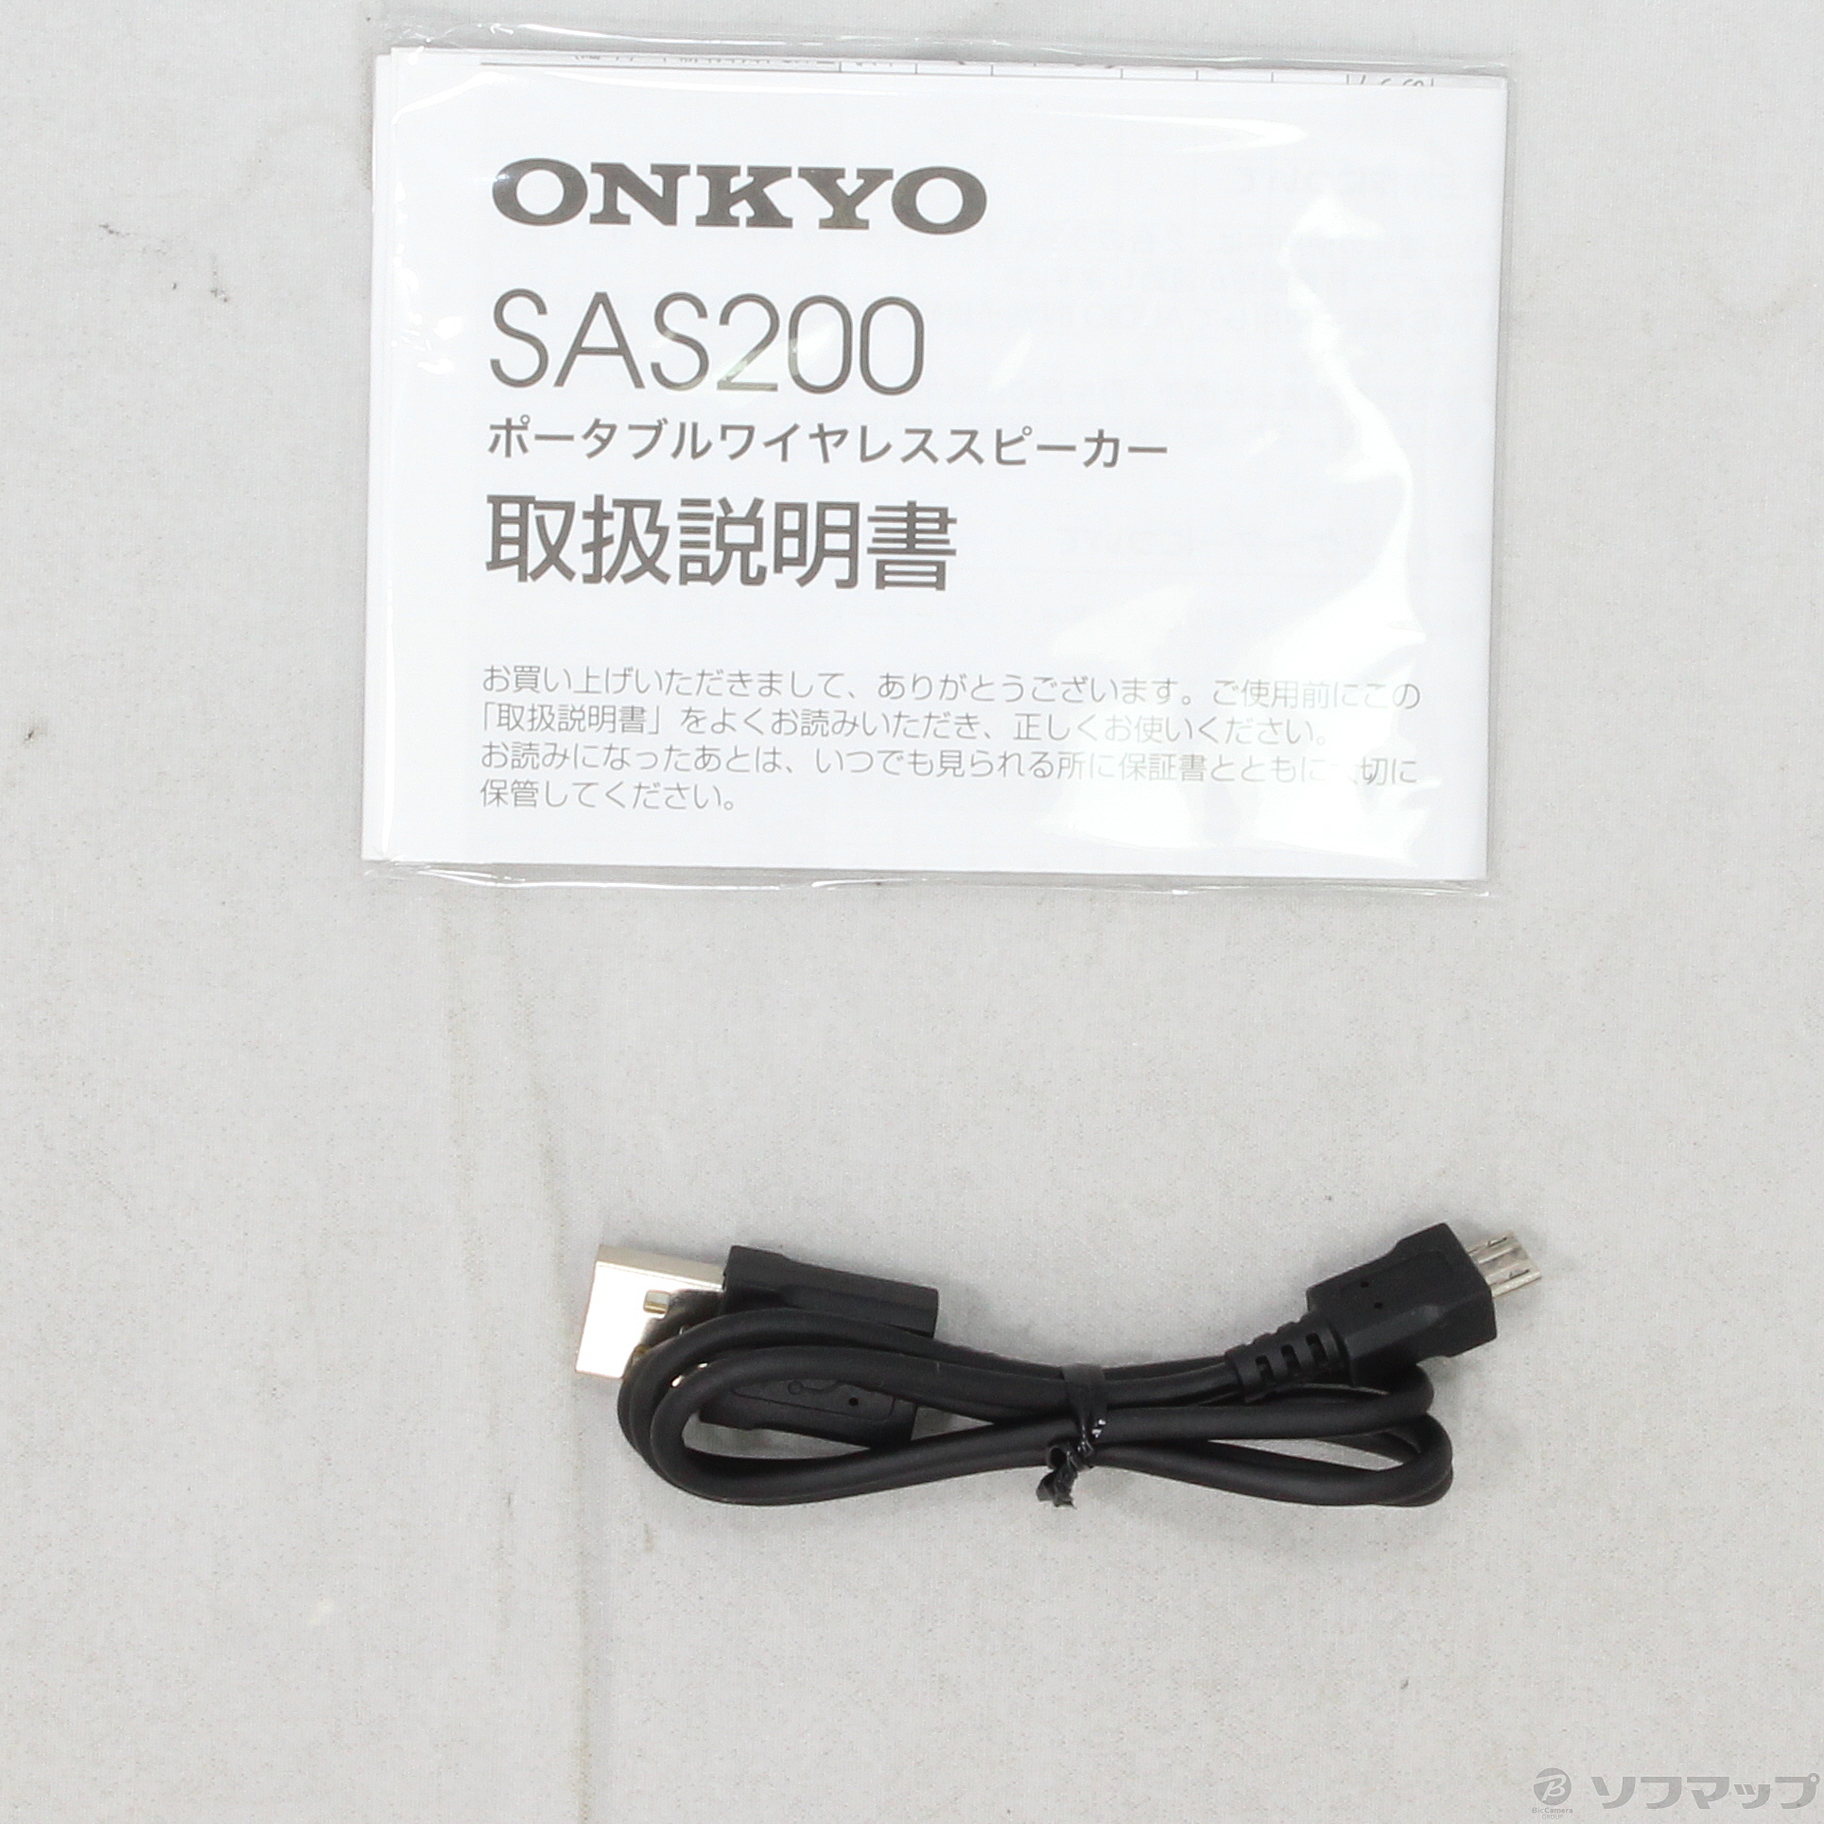 ONKYO SAS200 ホワイト(ジャンク) - 通販 - guianegro.com.br